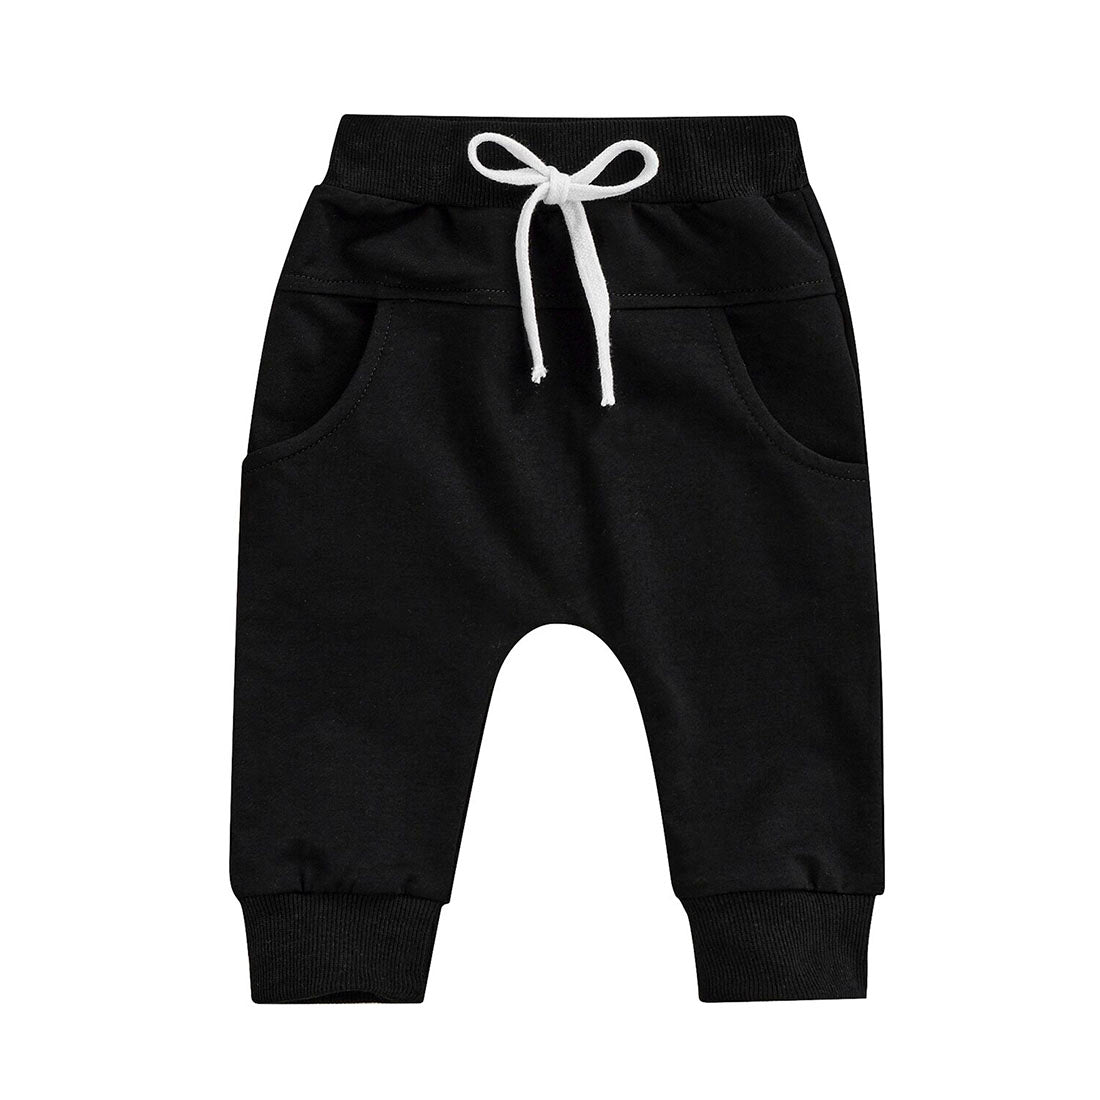 Black Solid Baby Pants   